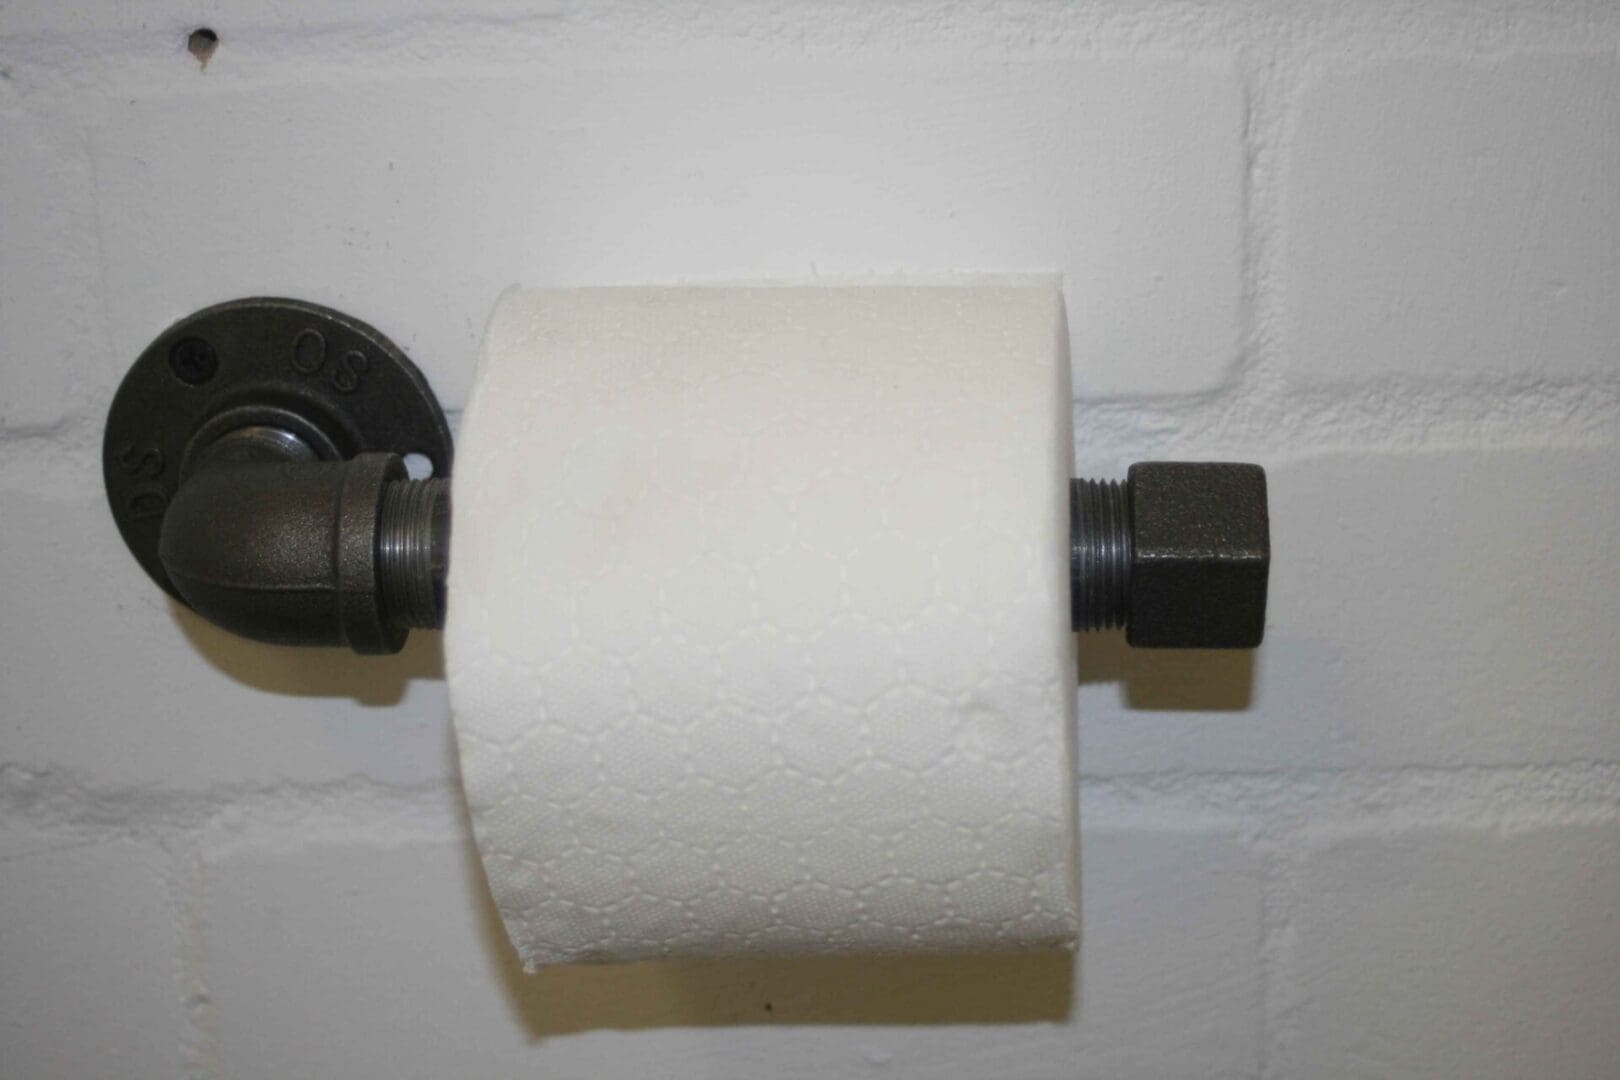 Toilet roll holder black pipe industrial steam punk